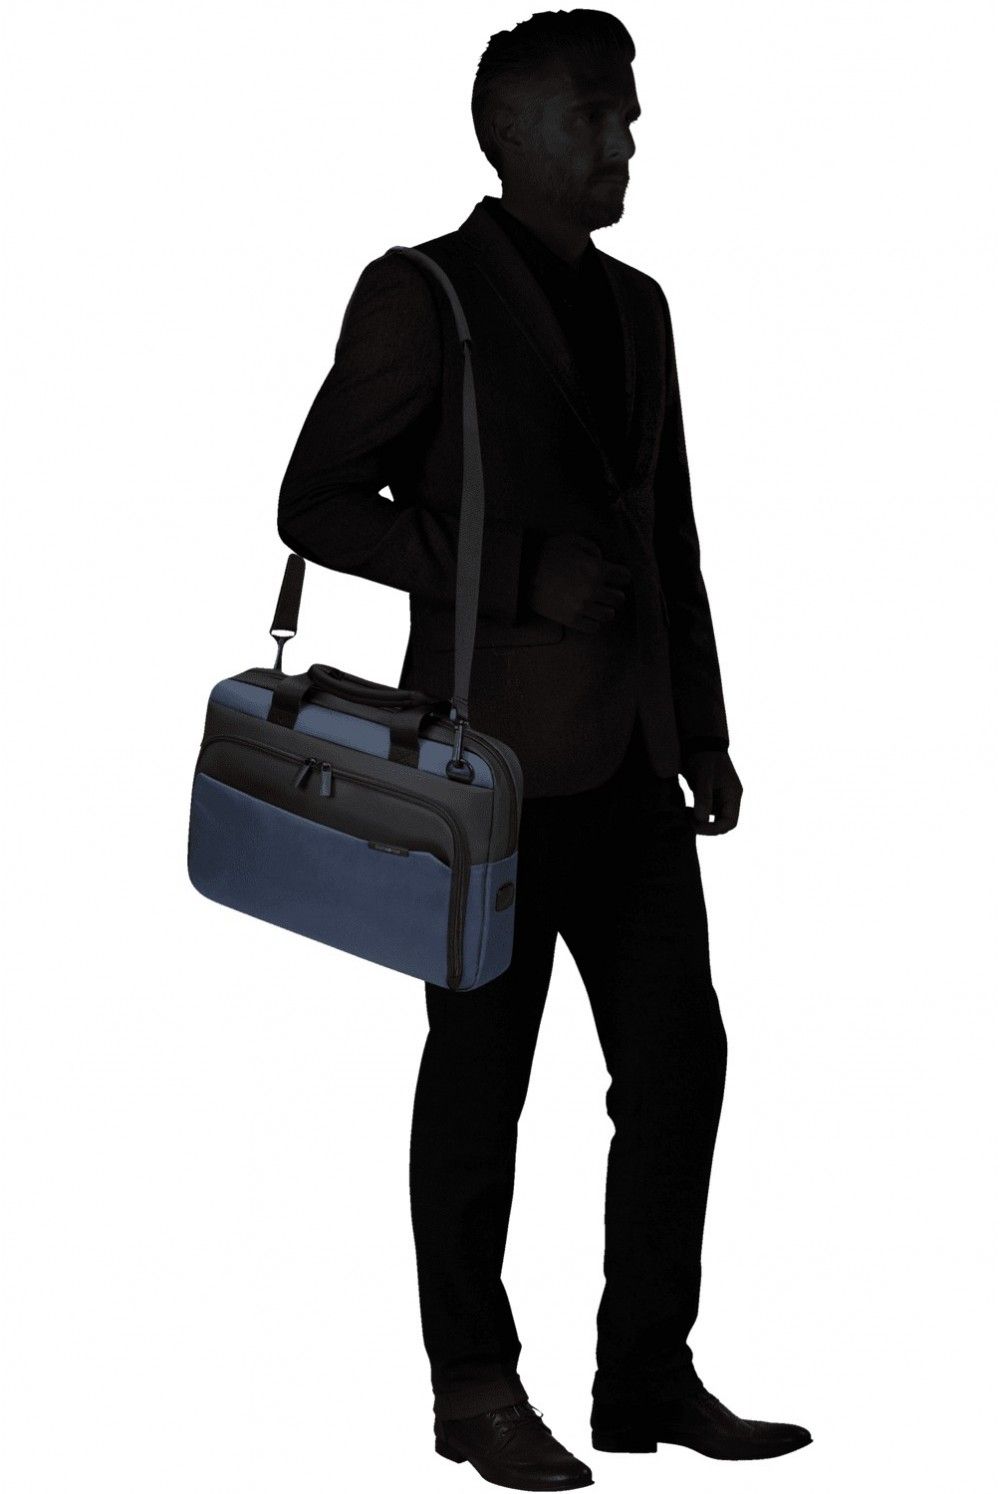 Samsonite Mysight briefcase 15.6 inches